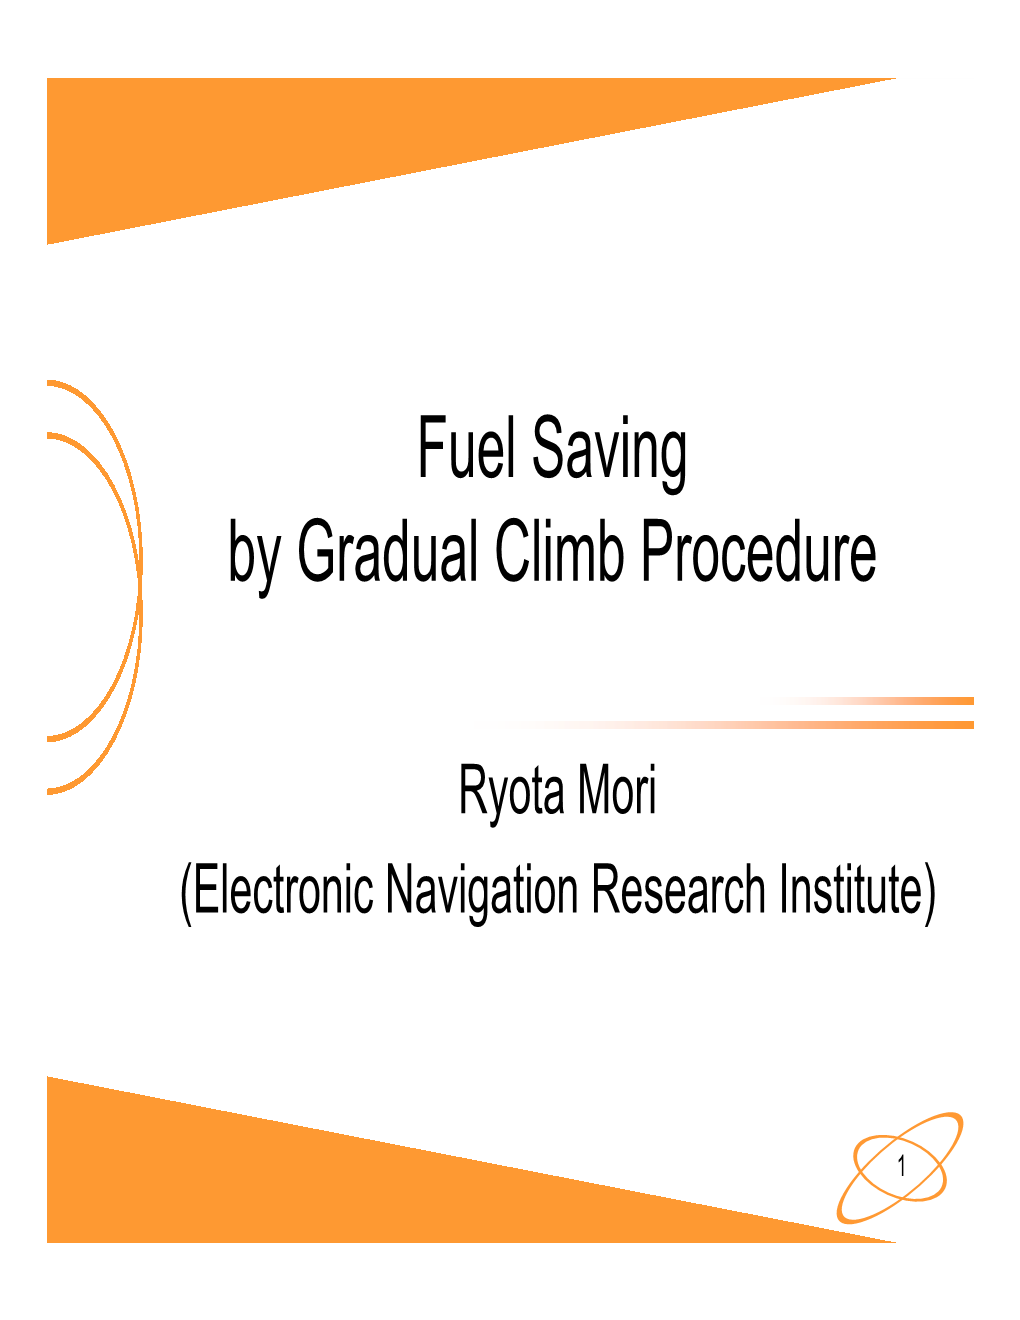 Fuel Saving by Gradual Climb Procedure